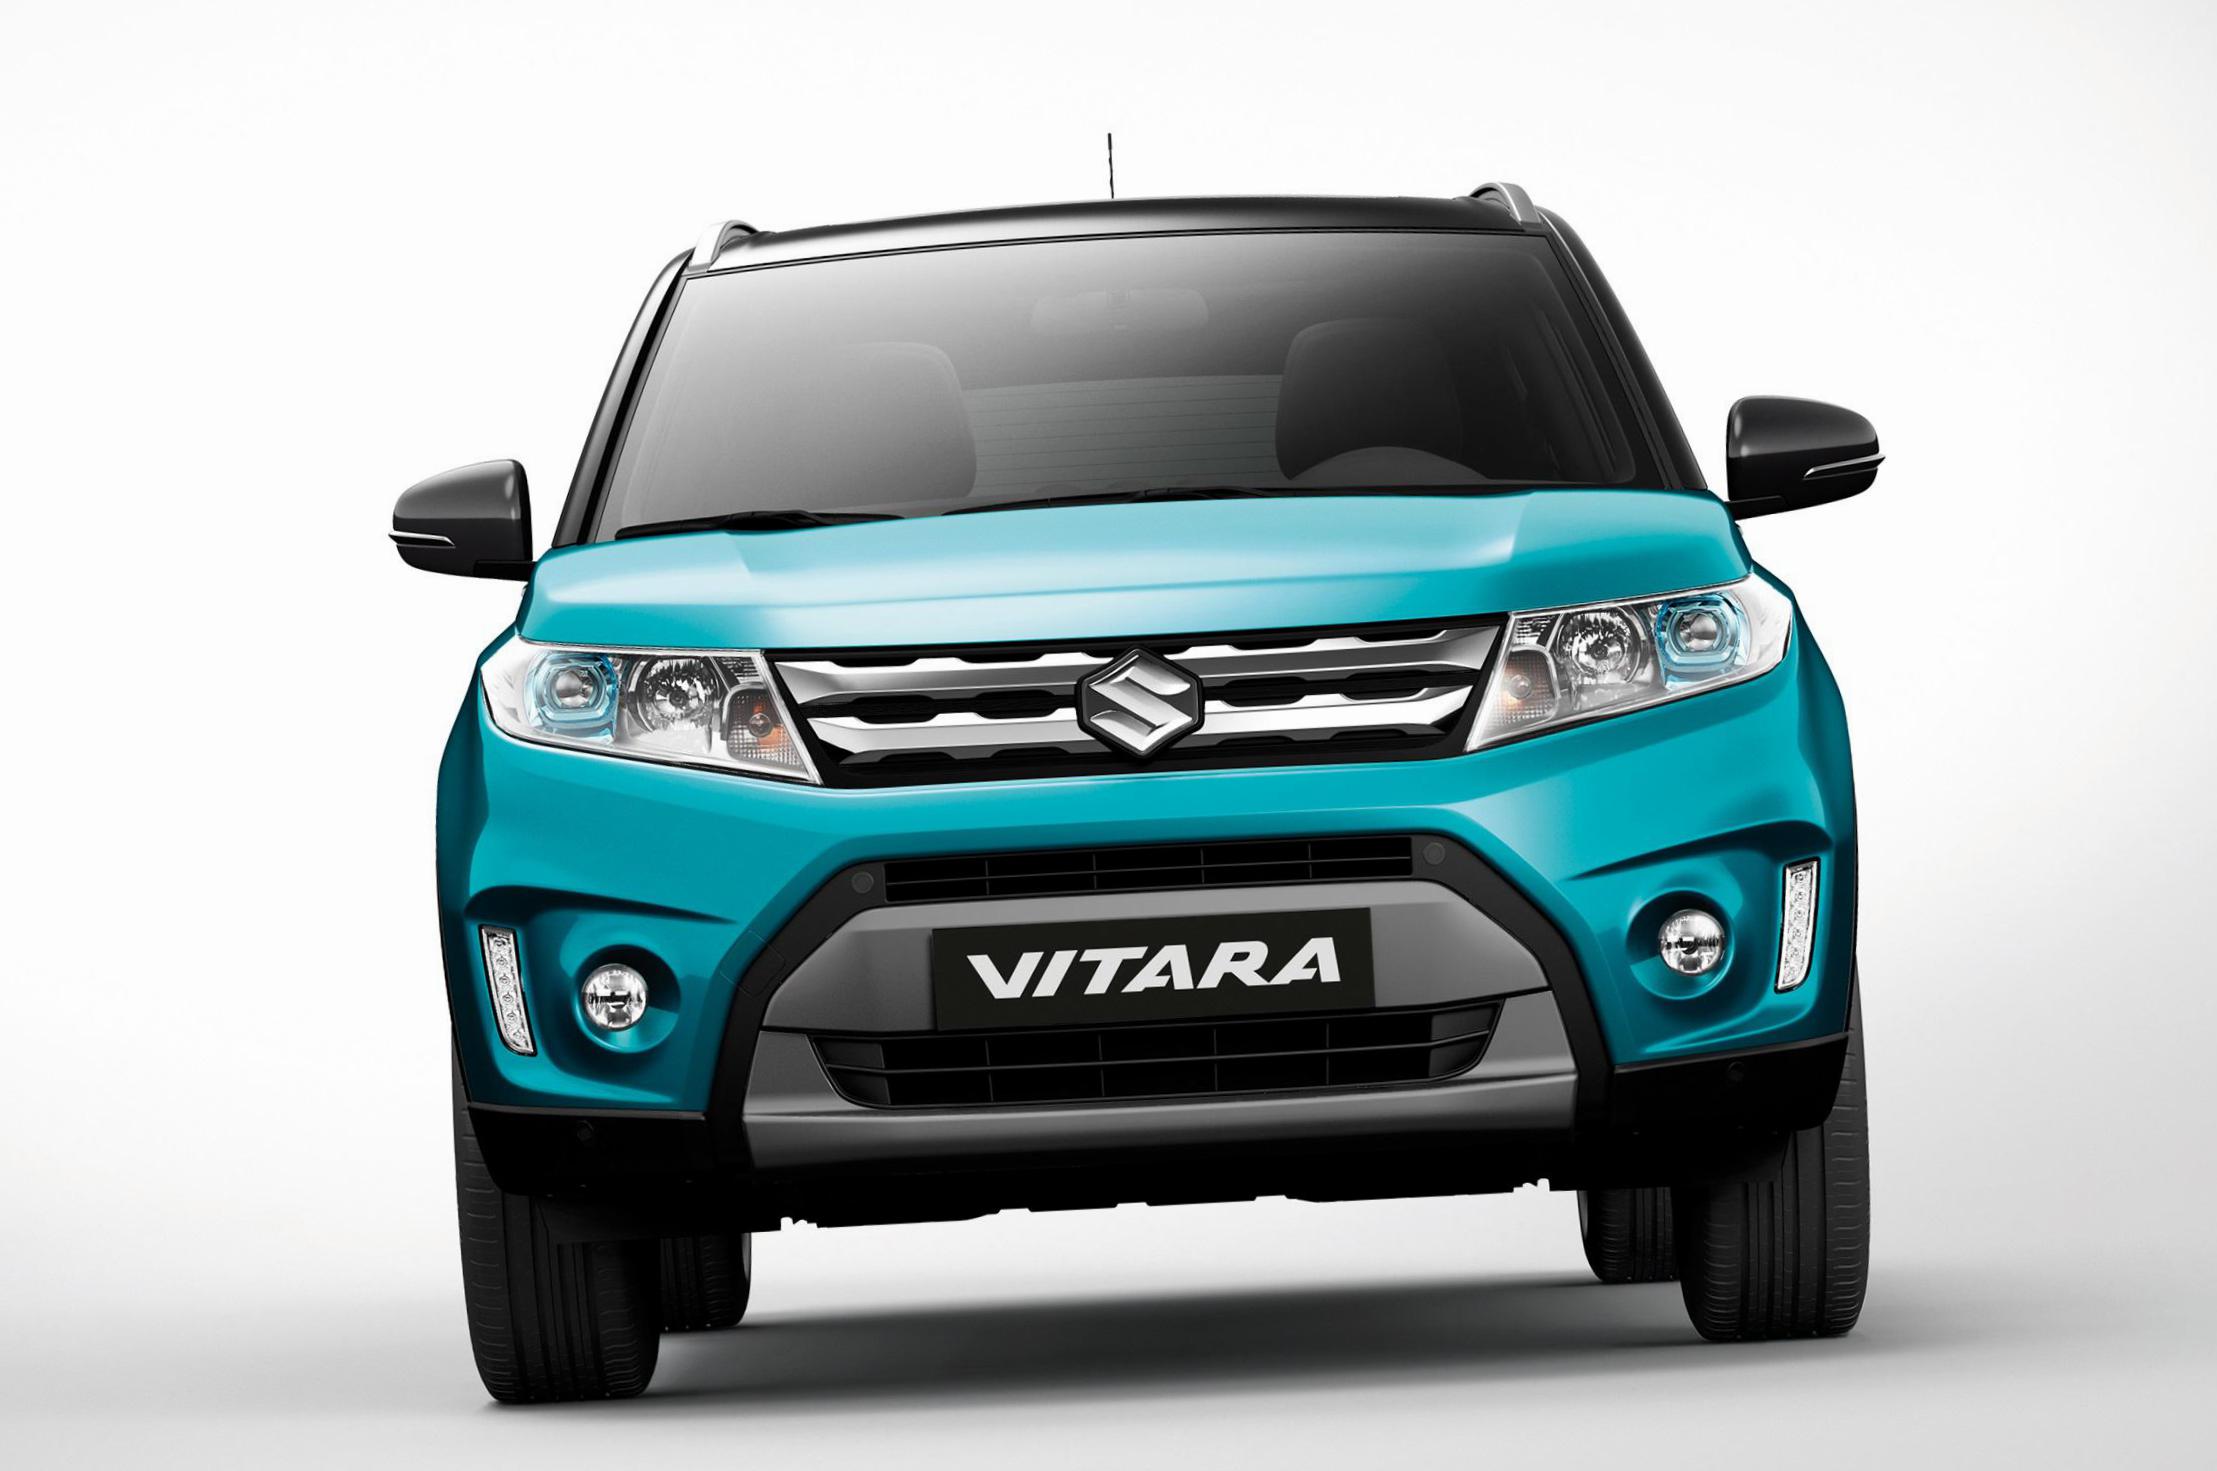 Suzuki Vitara concept 2009